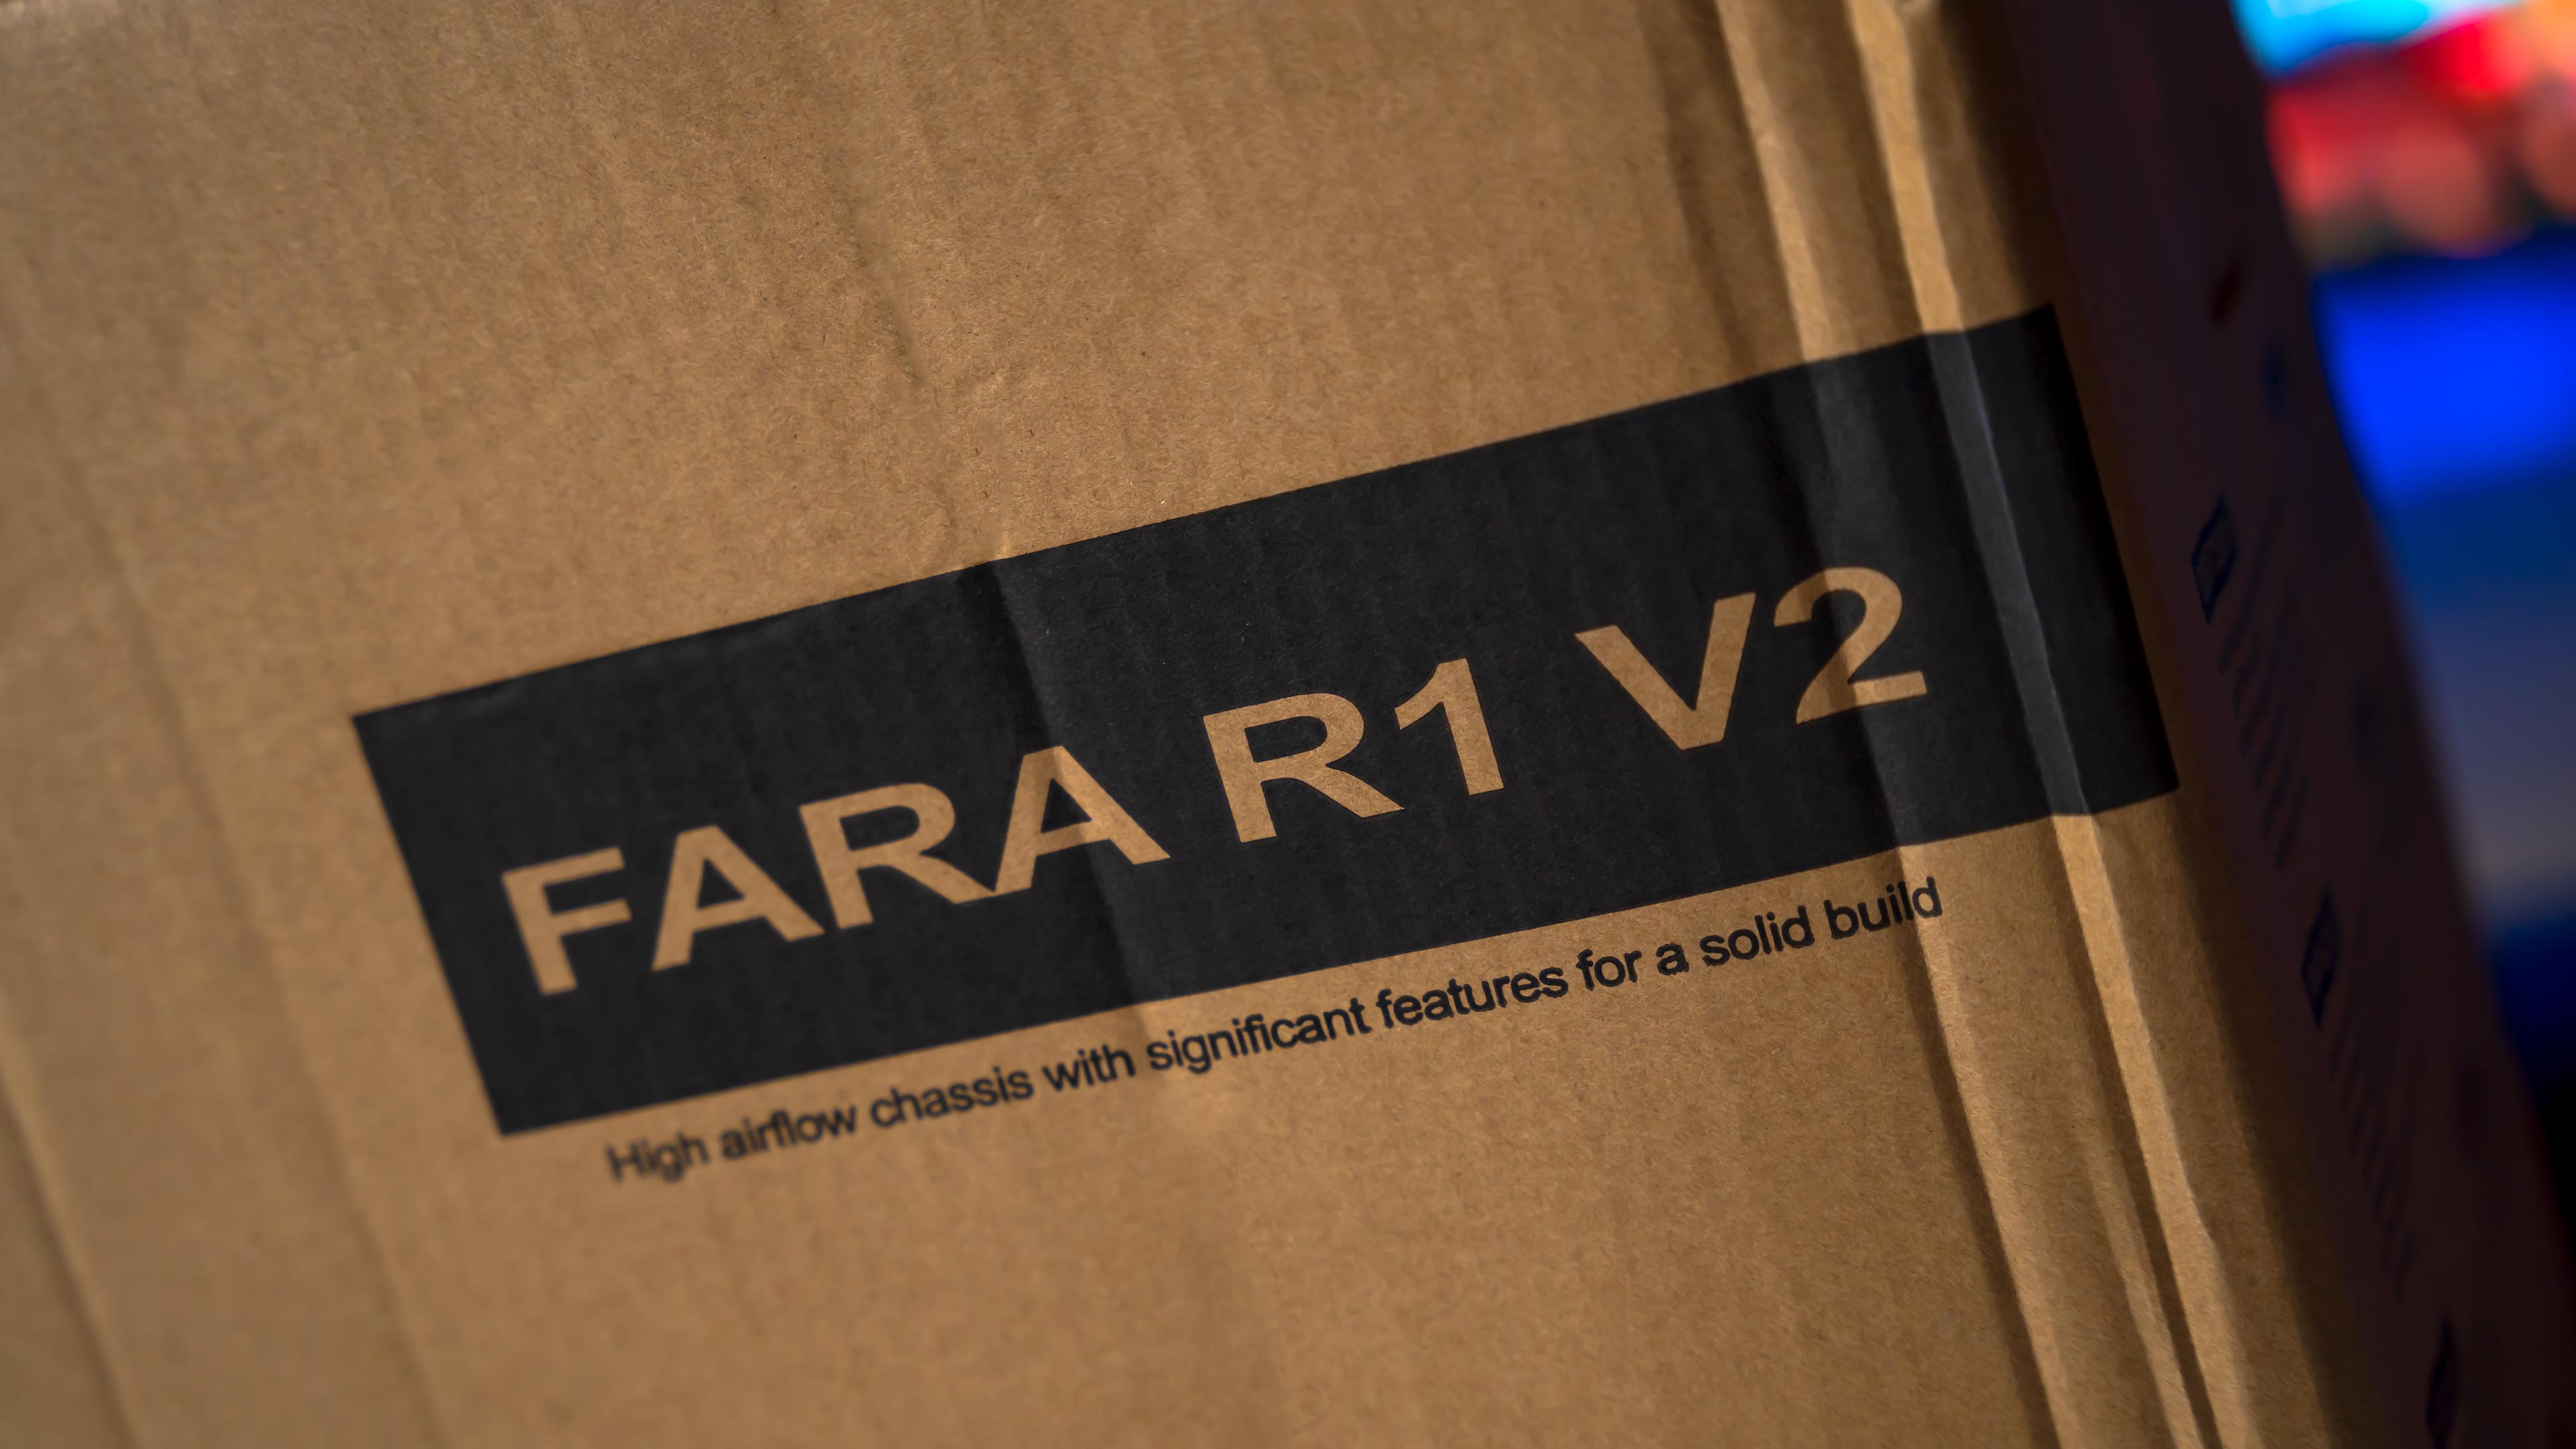 Silverstone Fara R1 V2 Box (2)